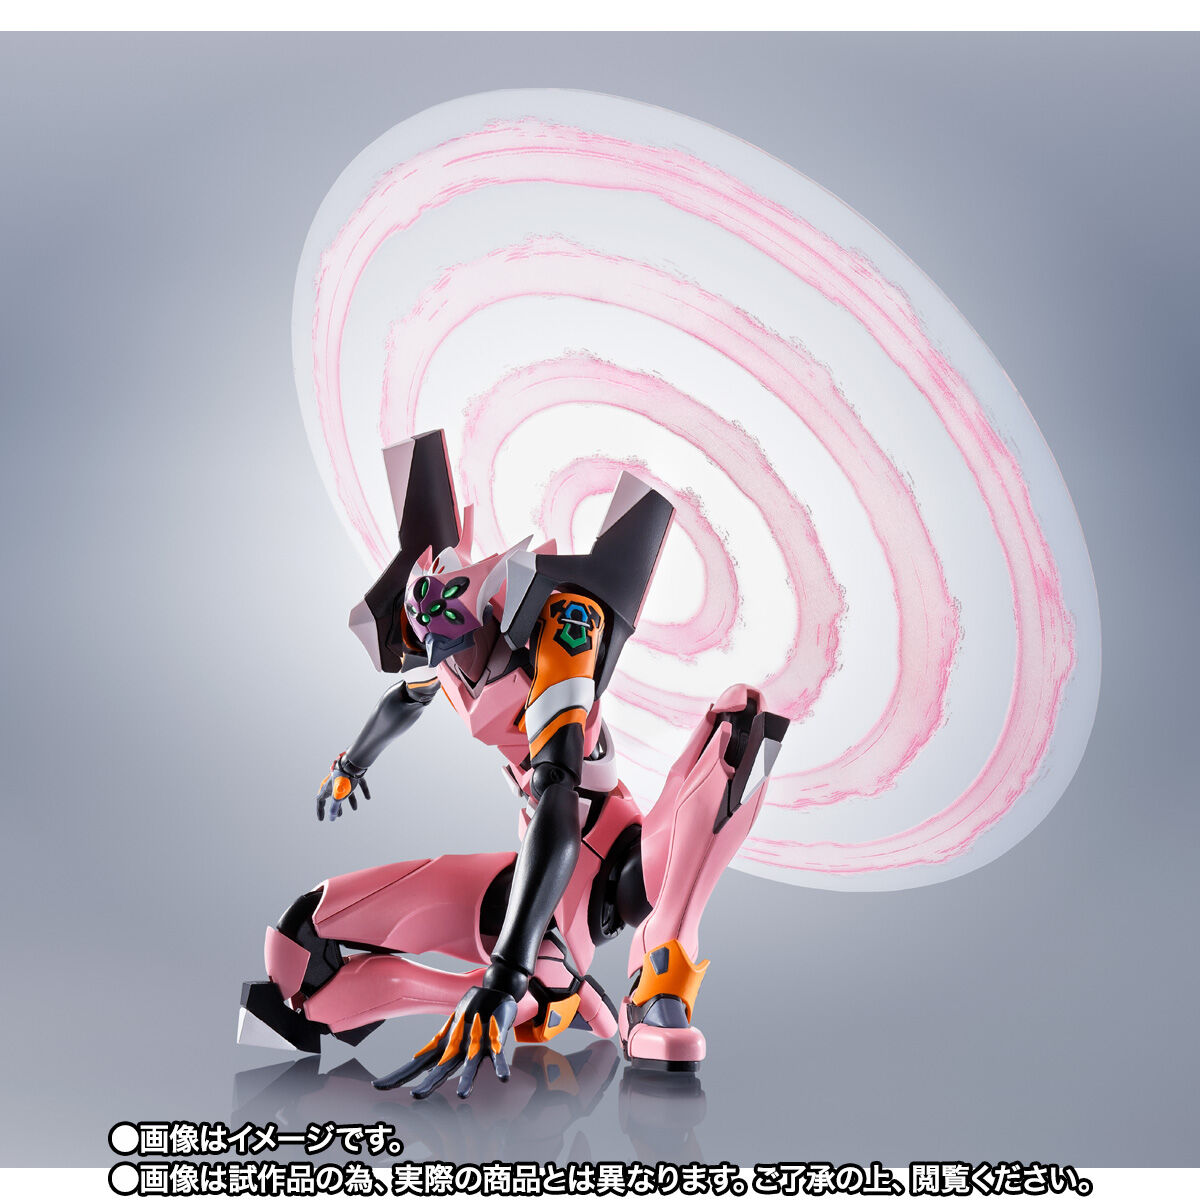 Robot Spirits(Side EVA) R-SP Multipurpose Humanoid Decisive Weapon,Artificial Human Evangelion Production Model Custom Type-08γ